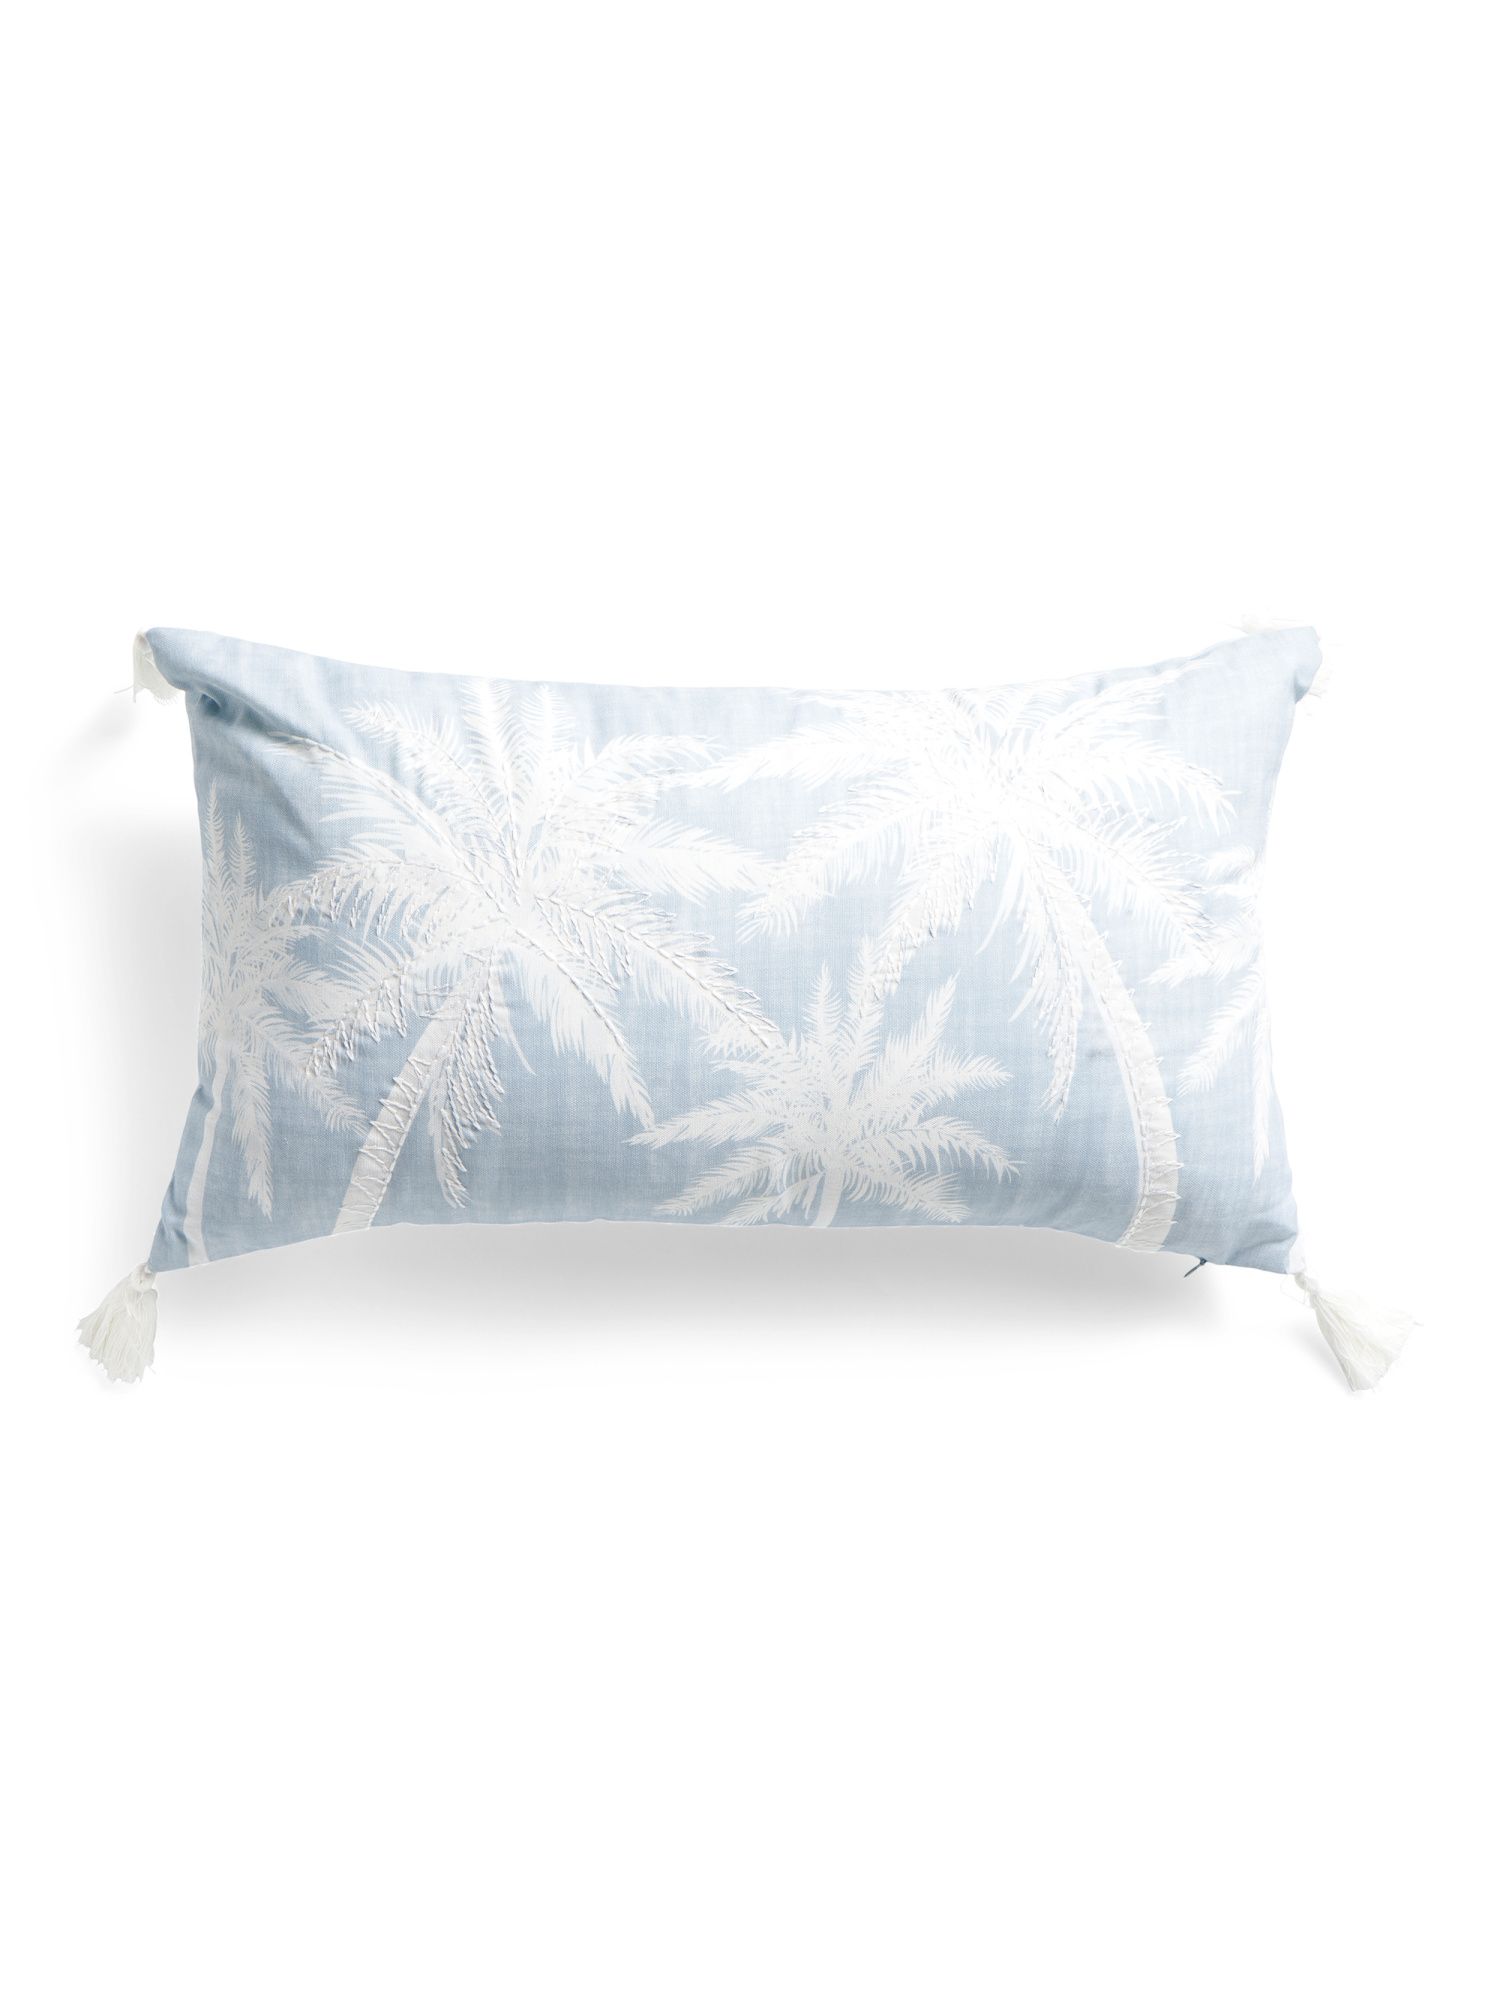 14x24 Indoor Outdoor Paulina Palms Pillow With Tassels | TJ Maxx